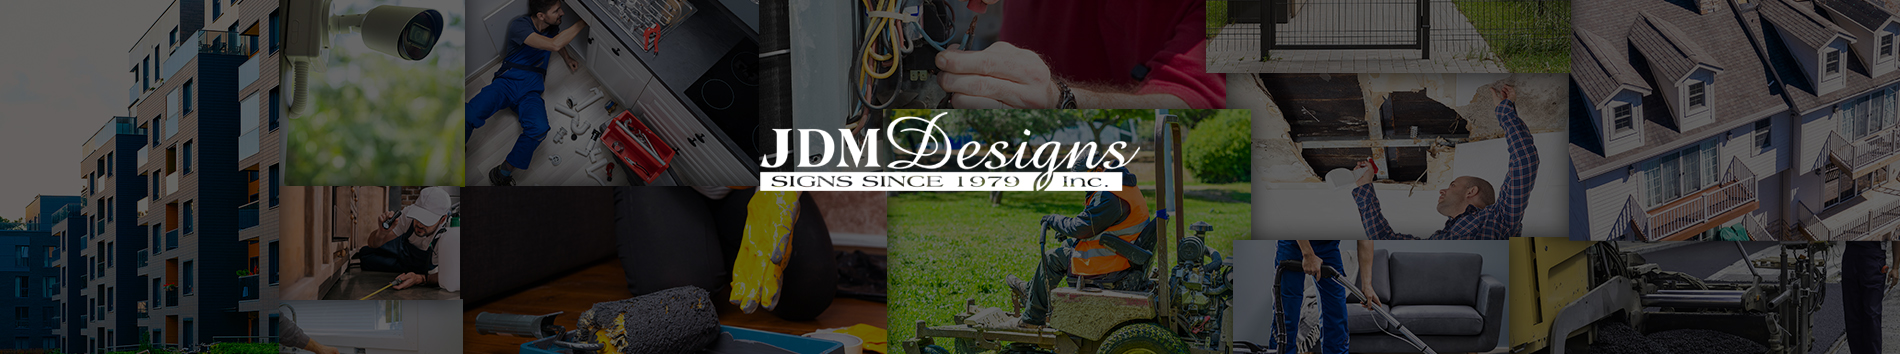 JDM Designs